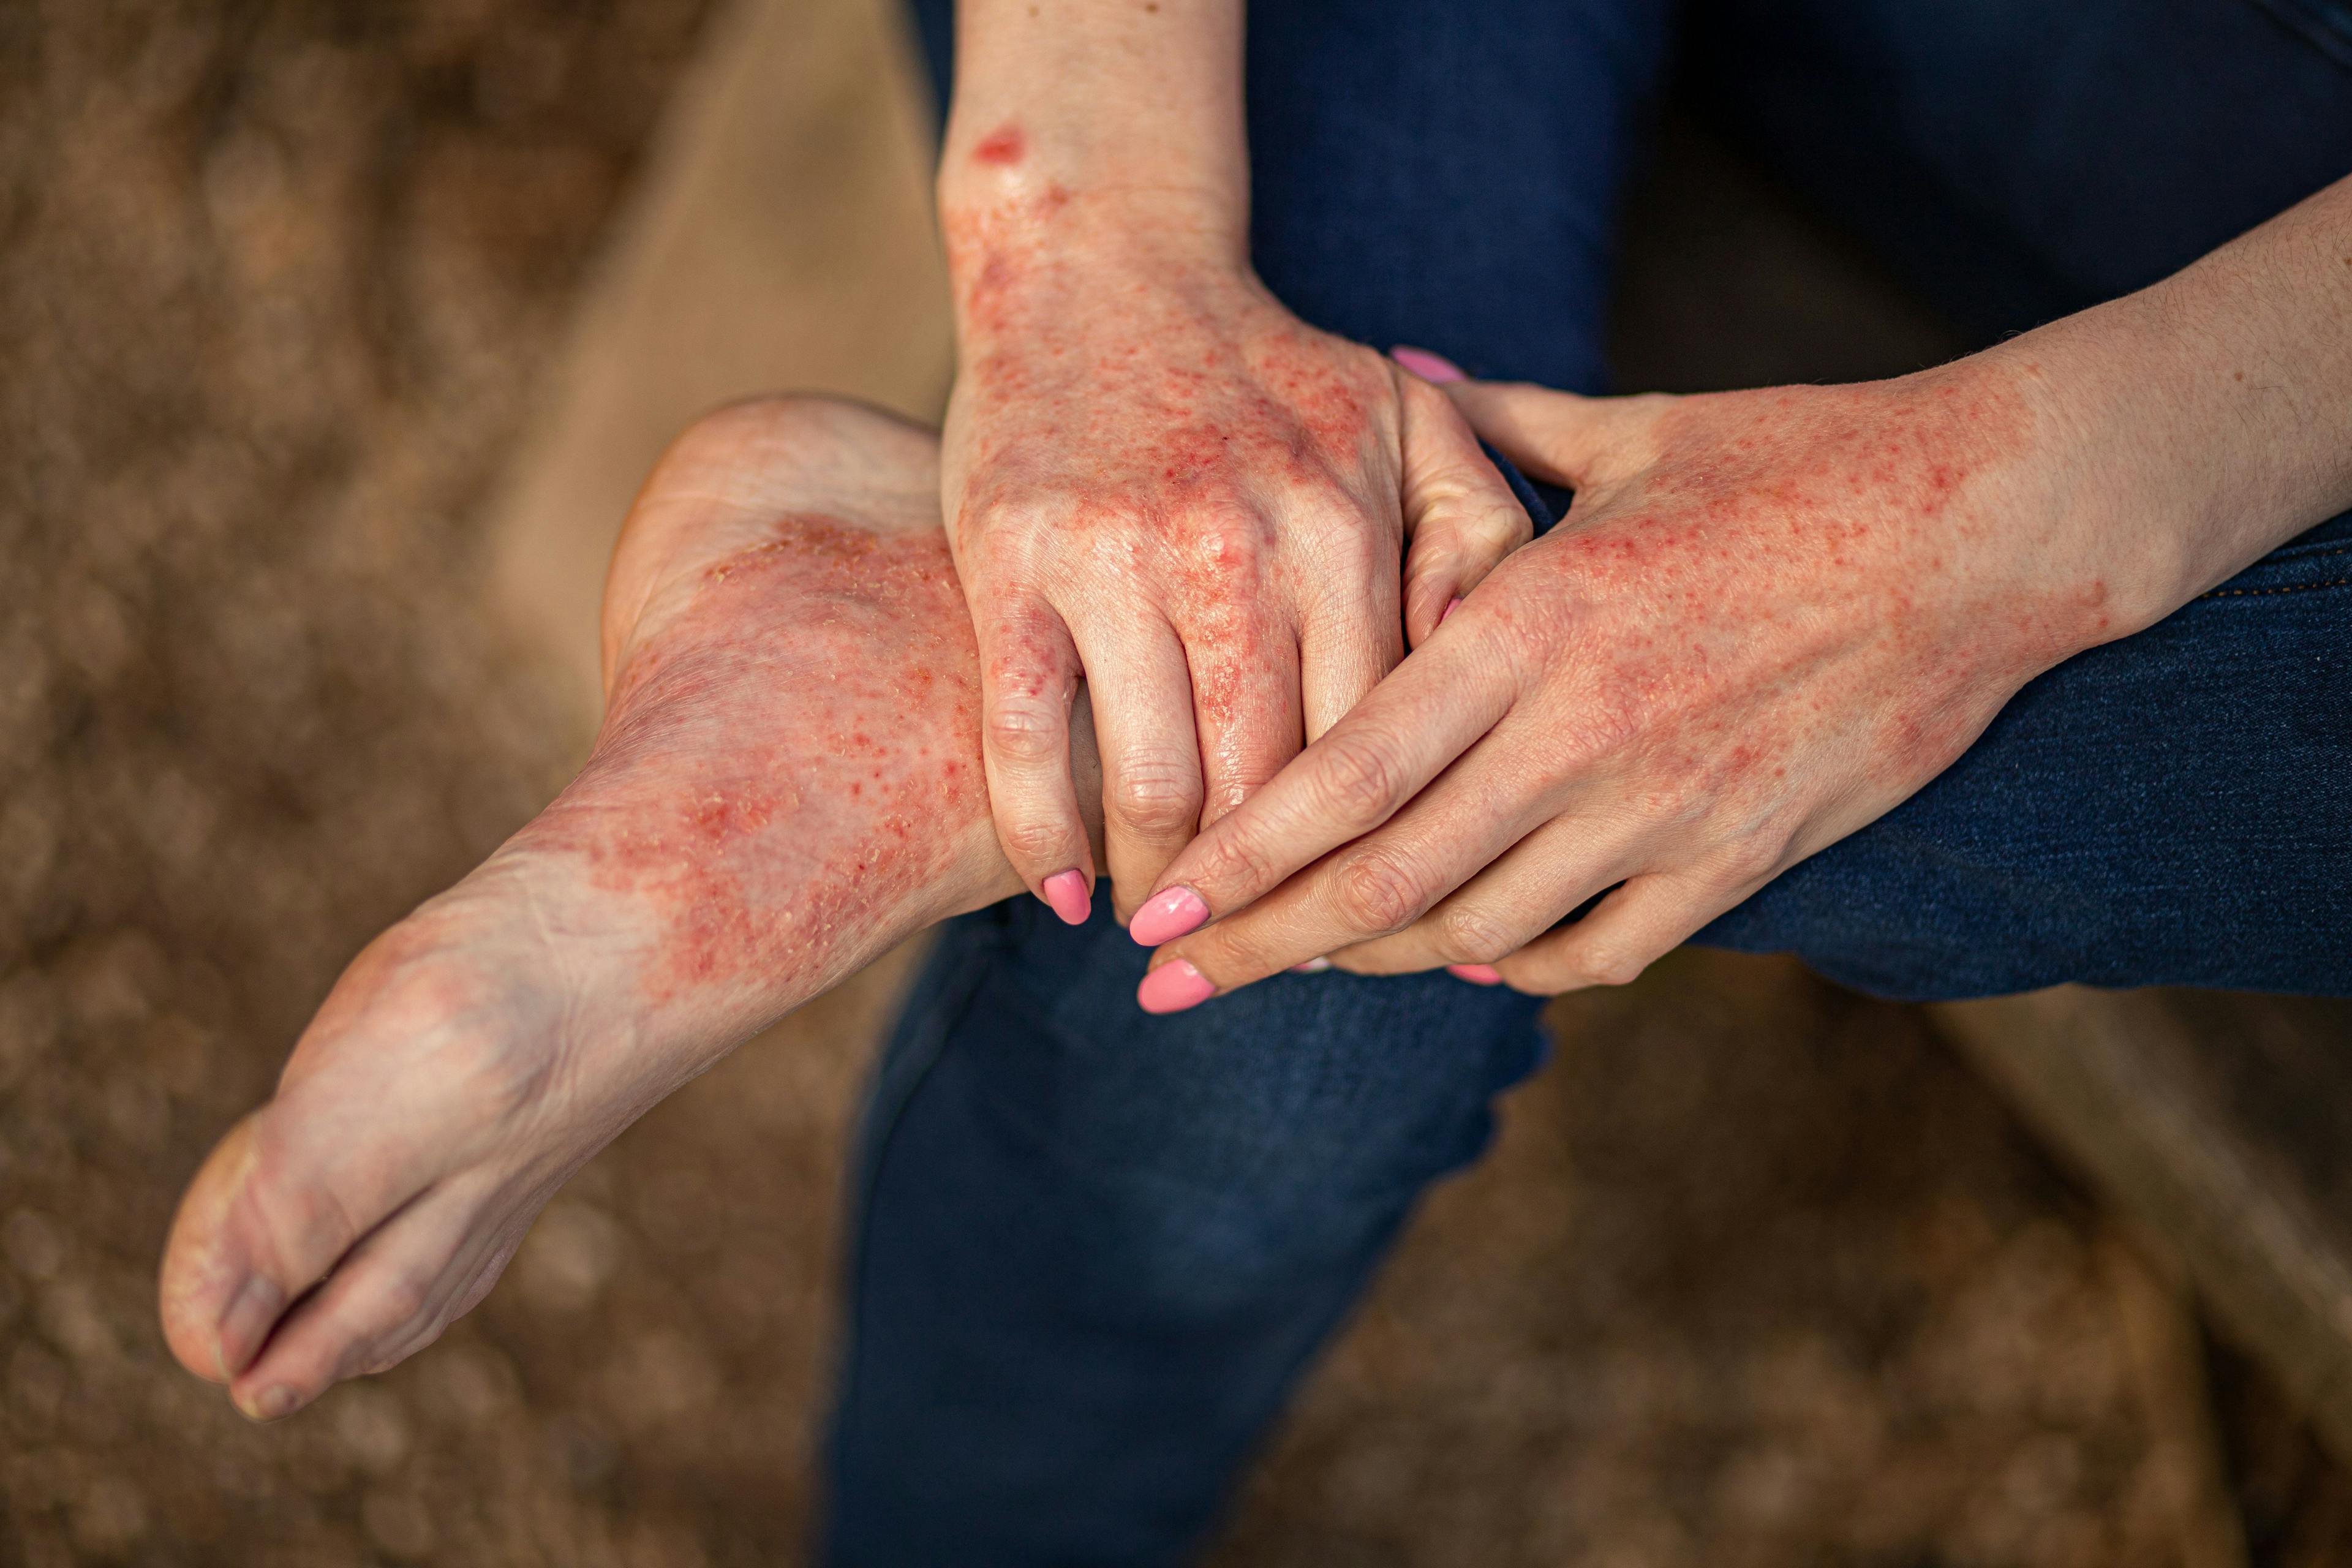 Atopic dermatitis on hands and feet | Image Credit: © InfiniteStudio - stock.adobe.com